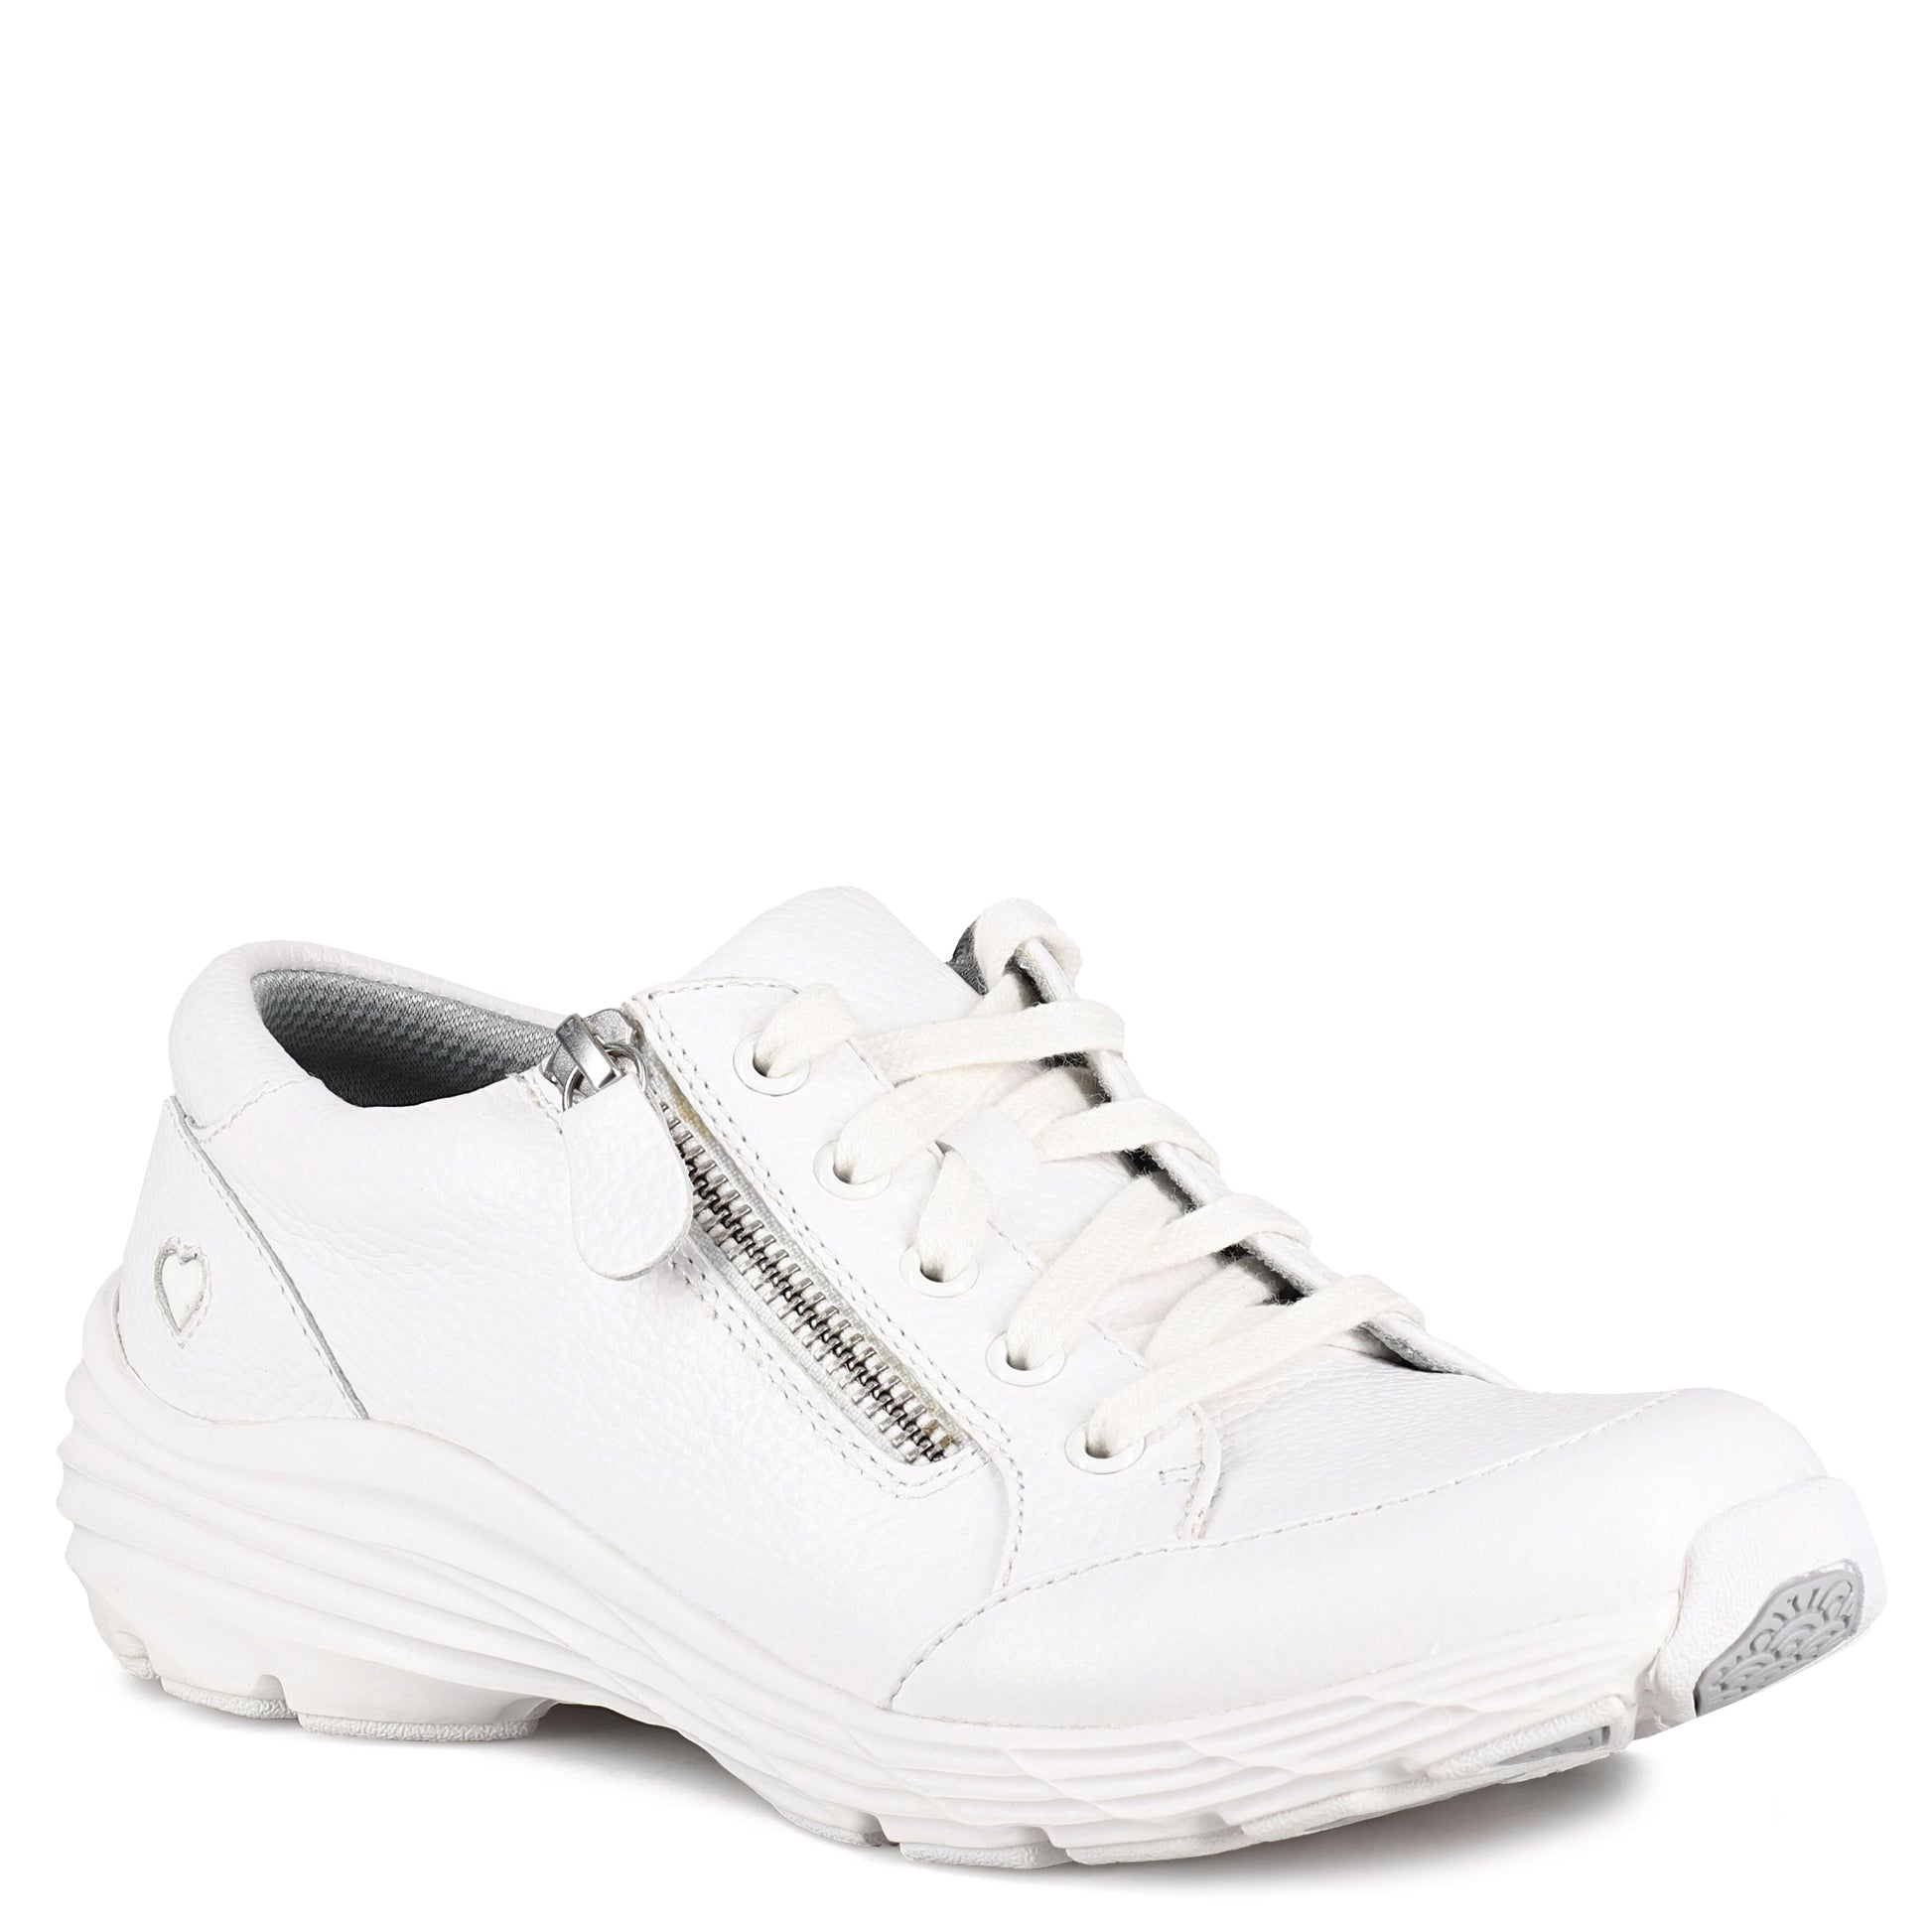 Nursemates Vigor White Shoes